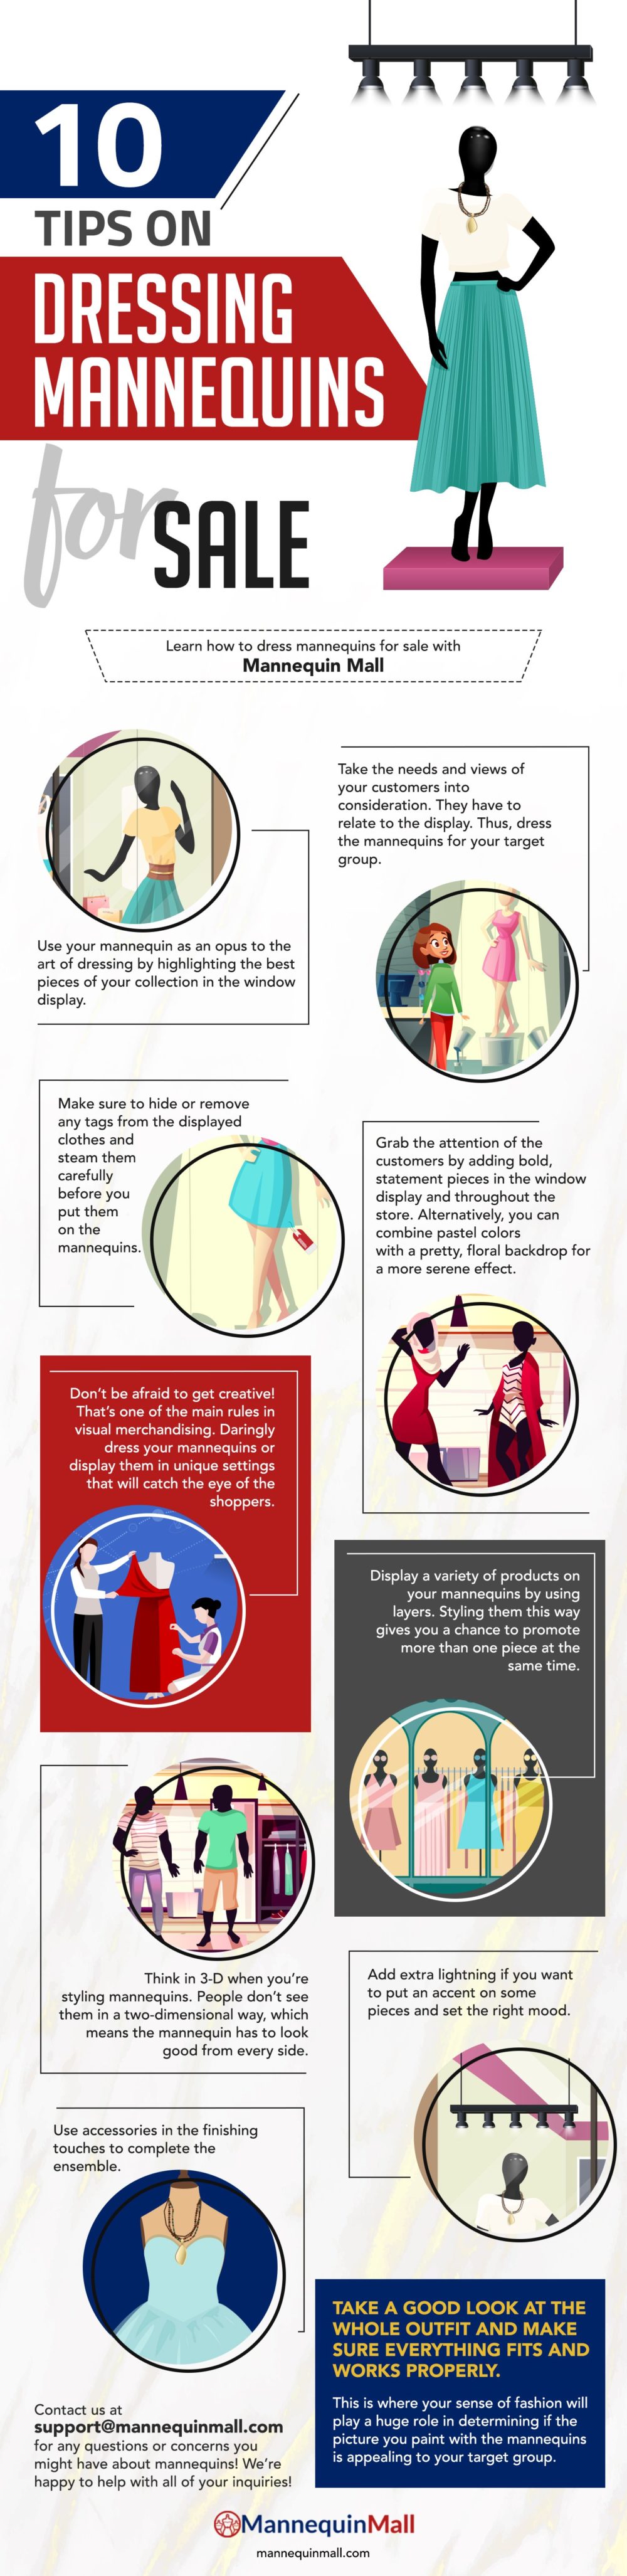 Top 10 Tips on Dressing Mannequins